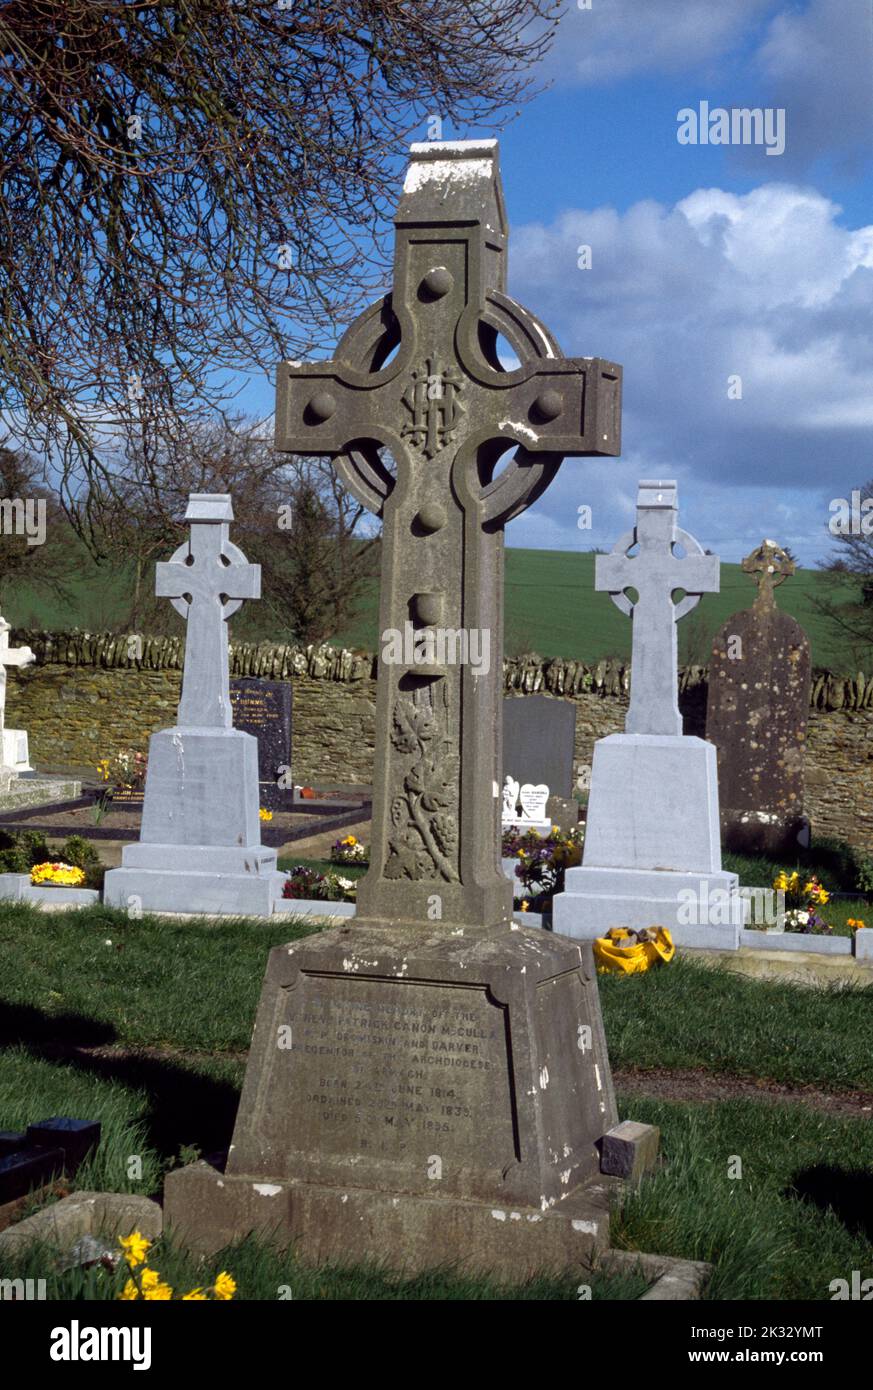 Meath Ireland Celtic Cross in Graveyard Stock Photo